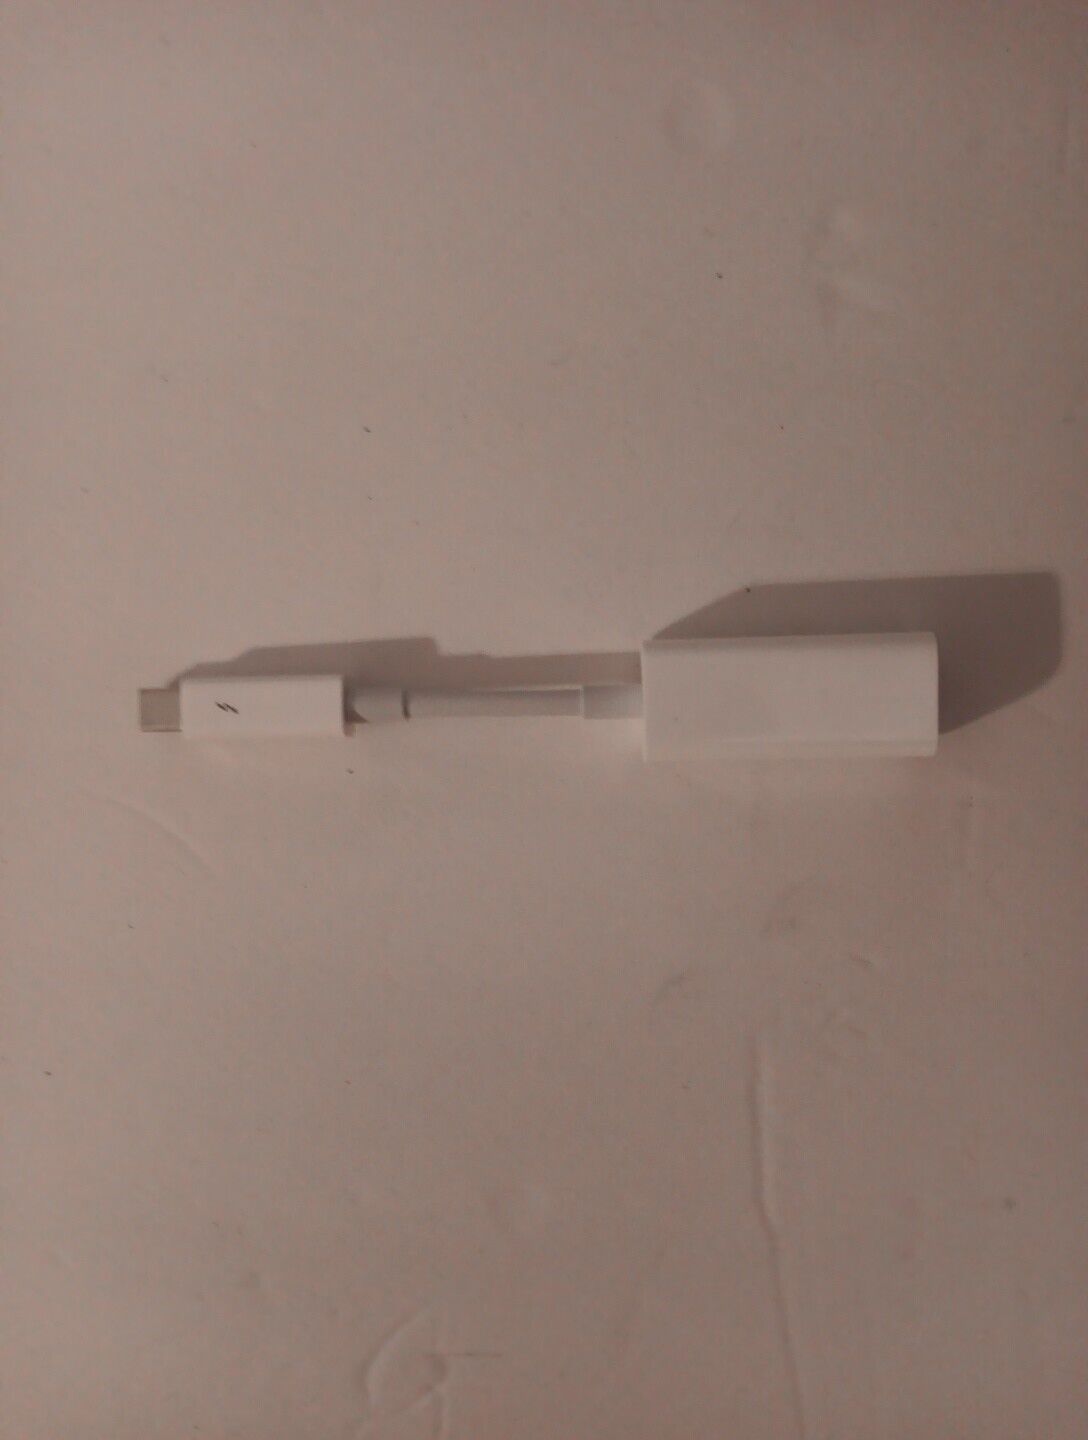 Apple A1433 Thunderbolt to Gigabit Ethernet Adapter Genuine Apple Tested